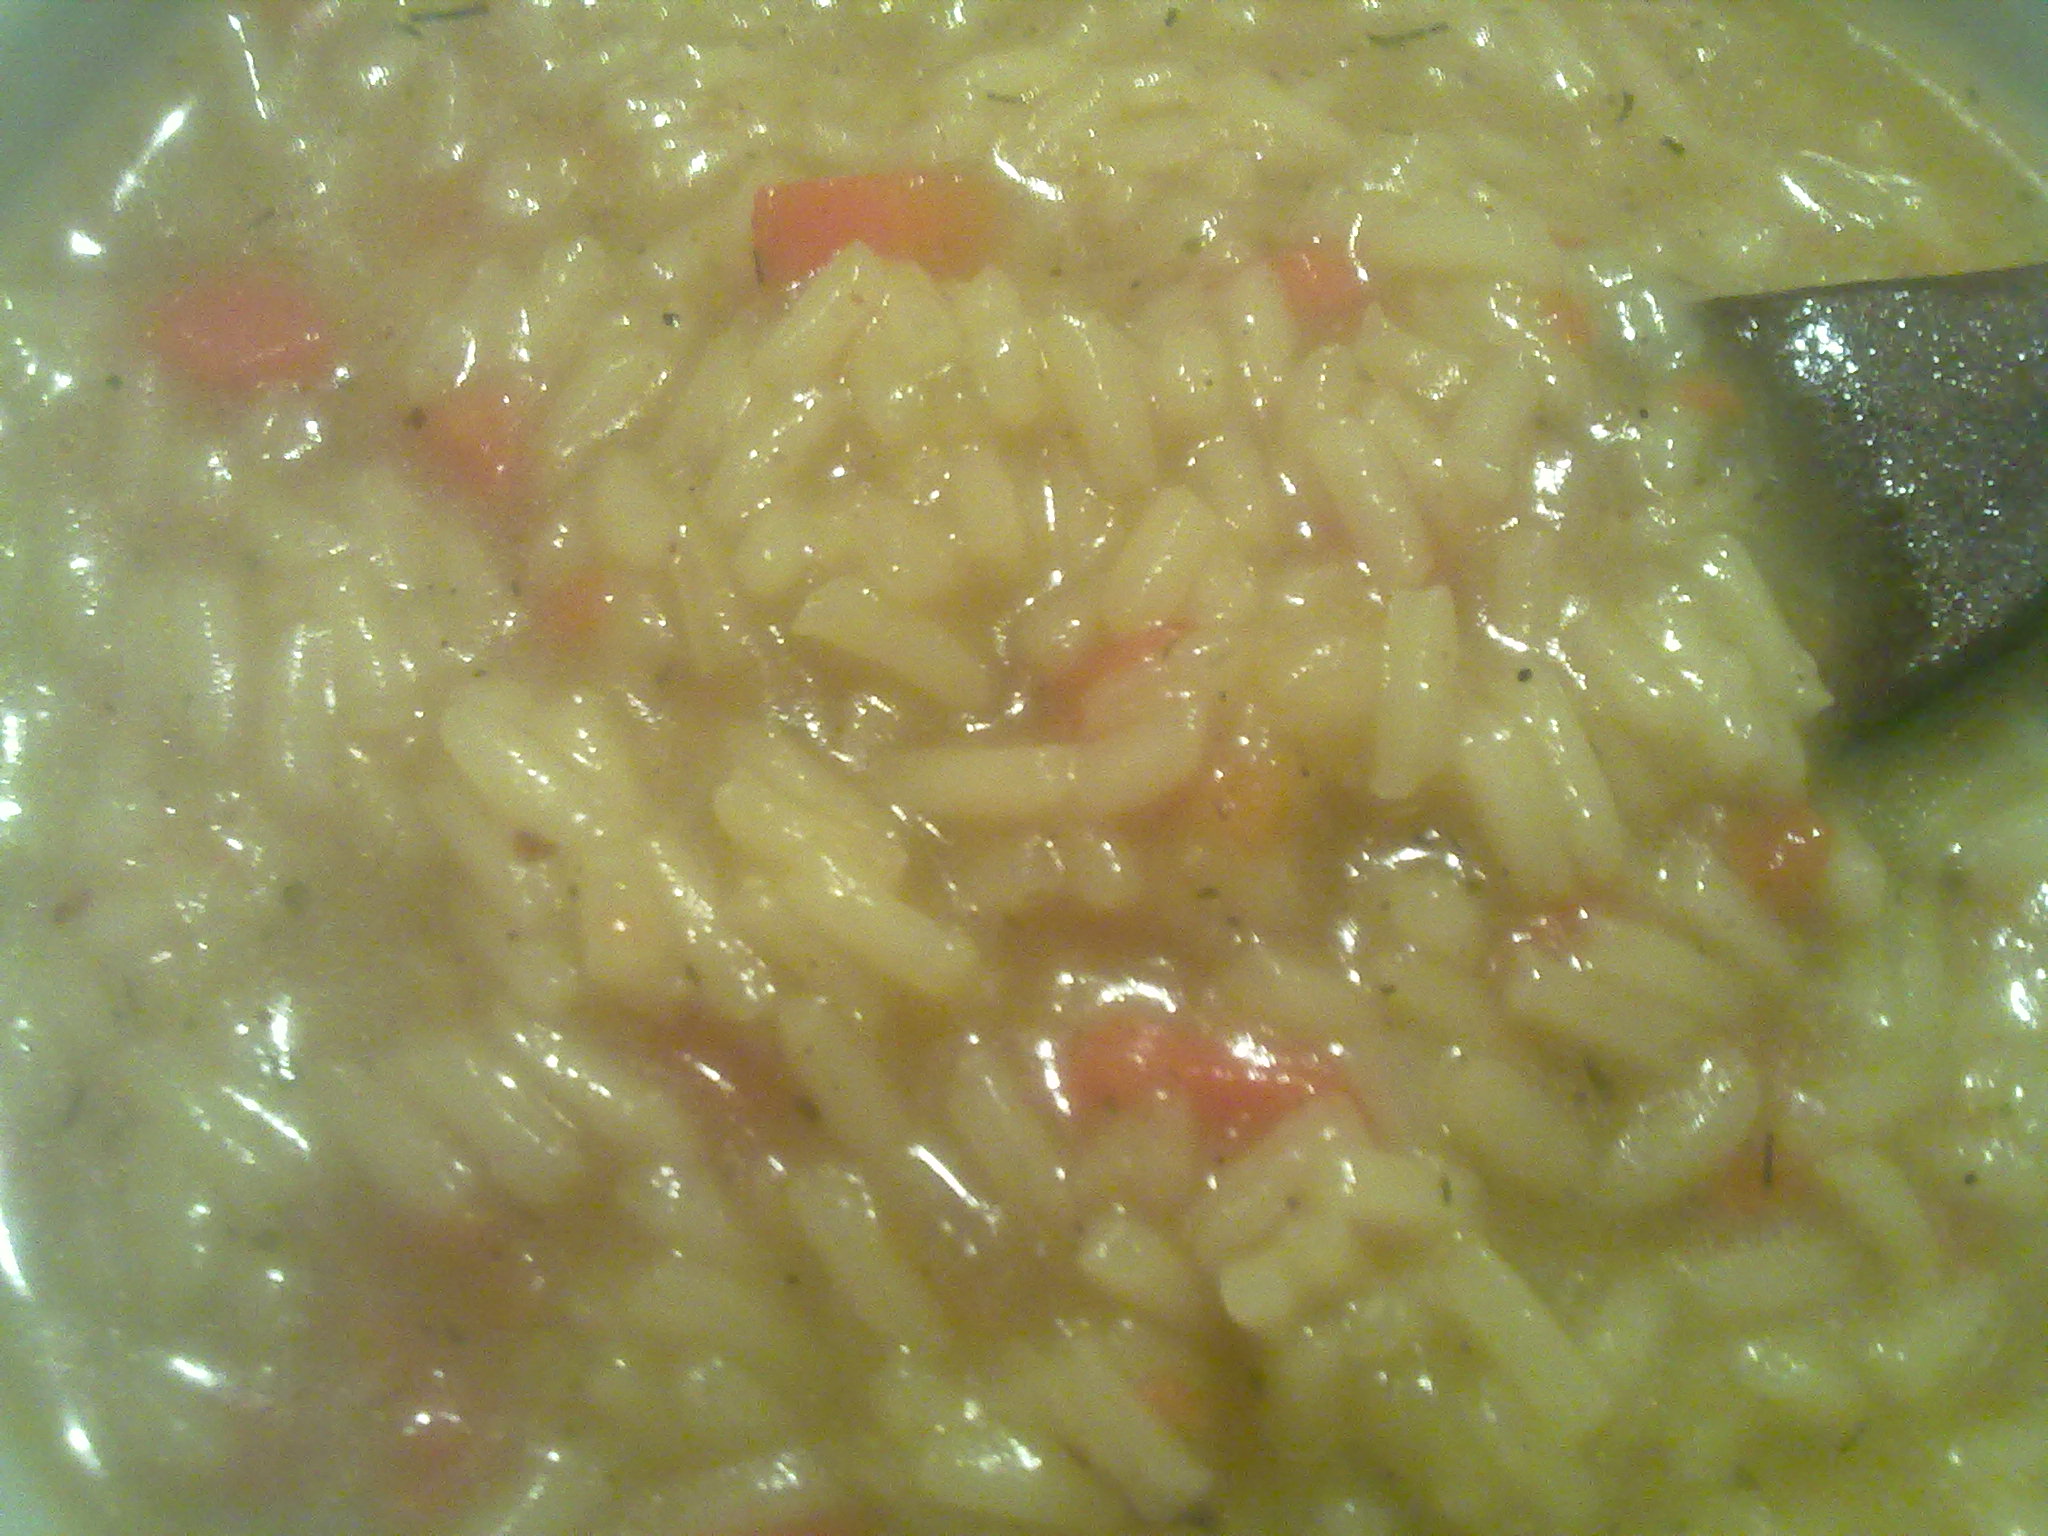 Orez fiert in supa de pui cu legume